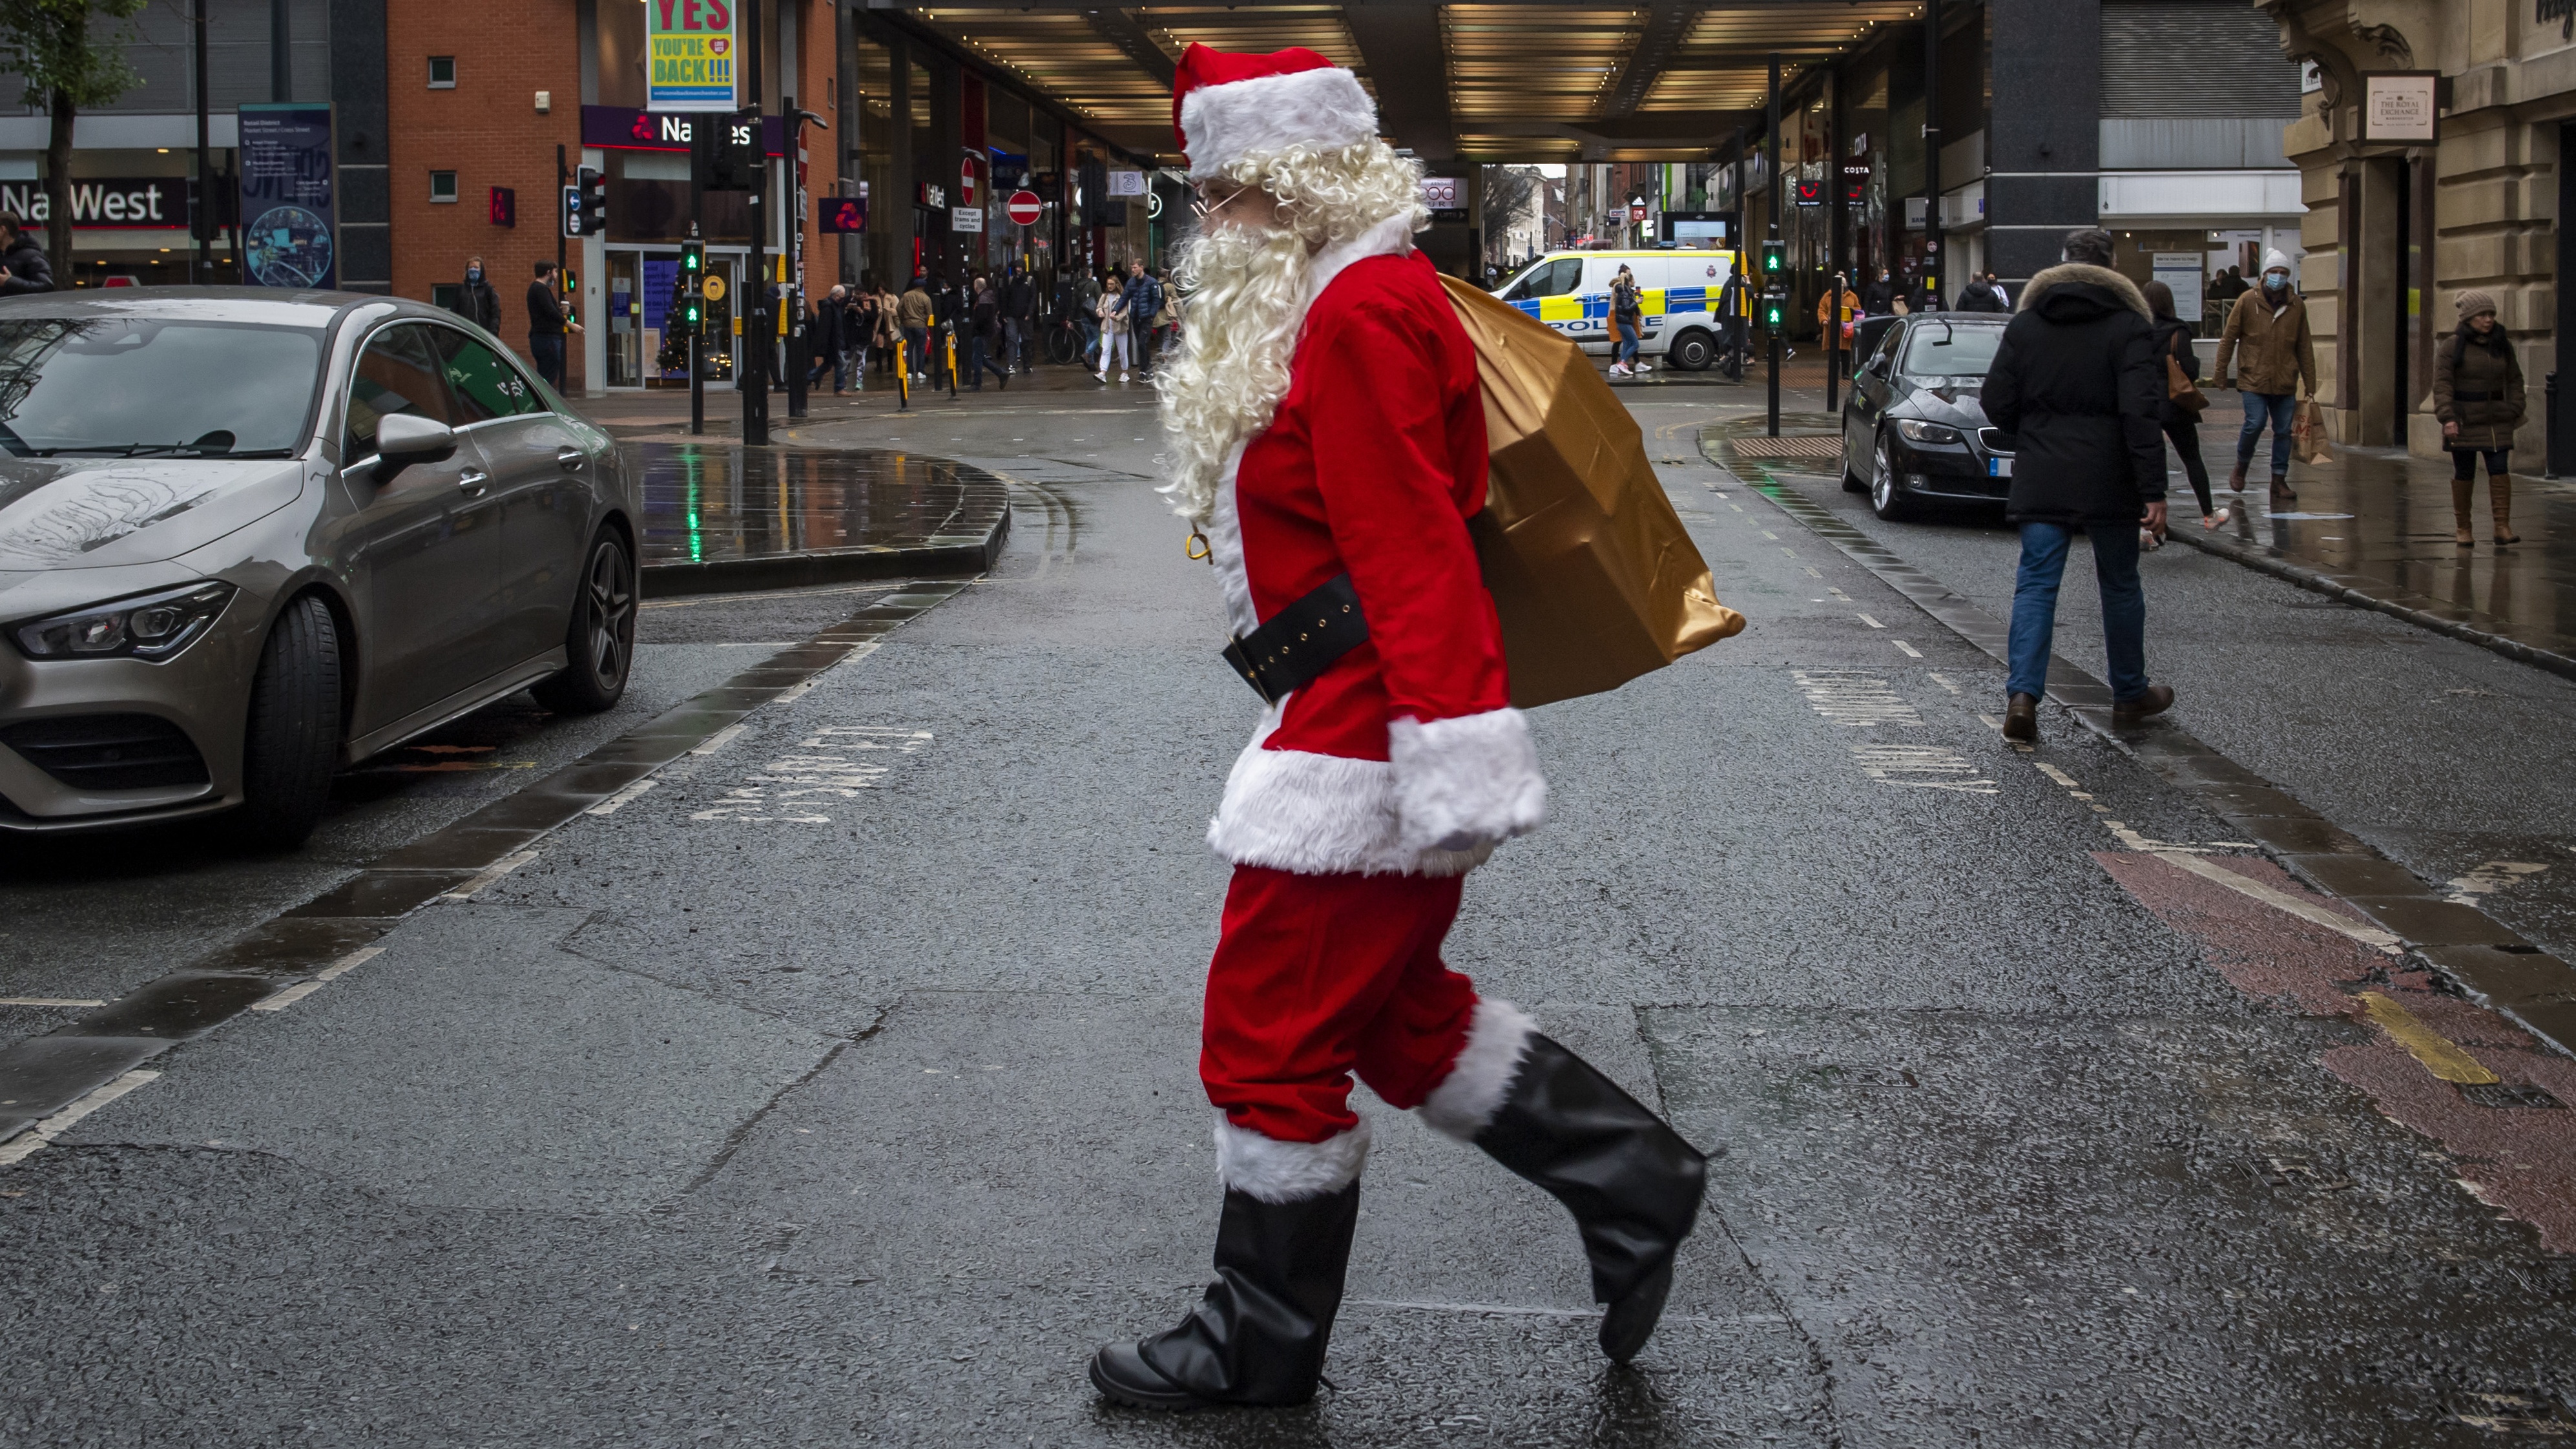 A man dressed as Santa Claus walks through Manchester city center